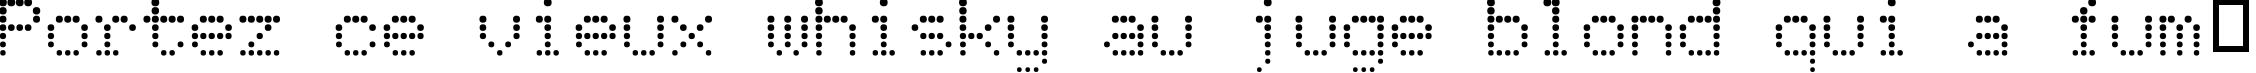 Пример написания шрифтом Atomic Clock Radio текста на французском